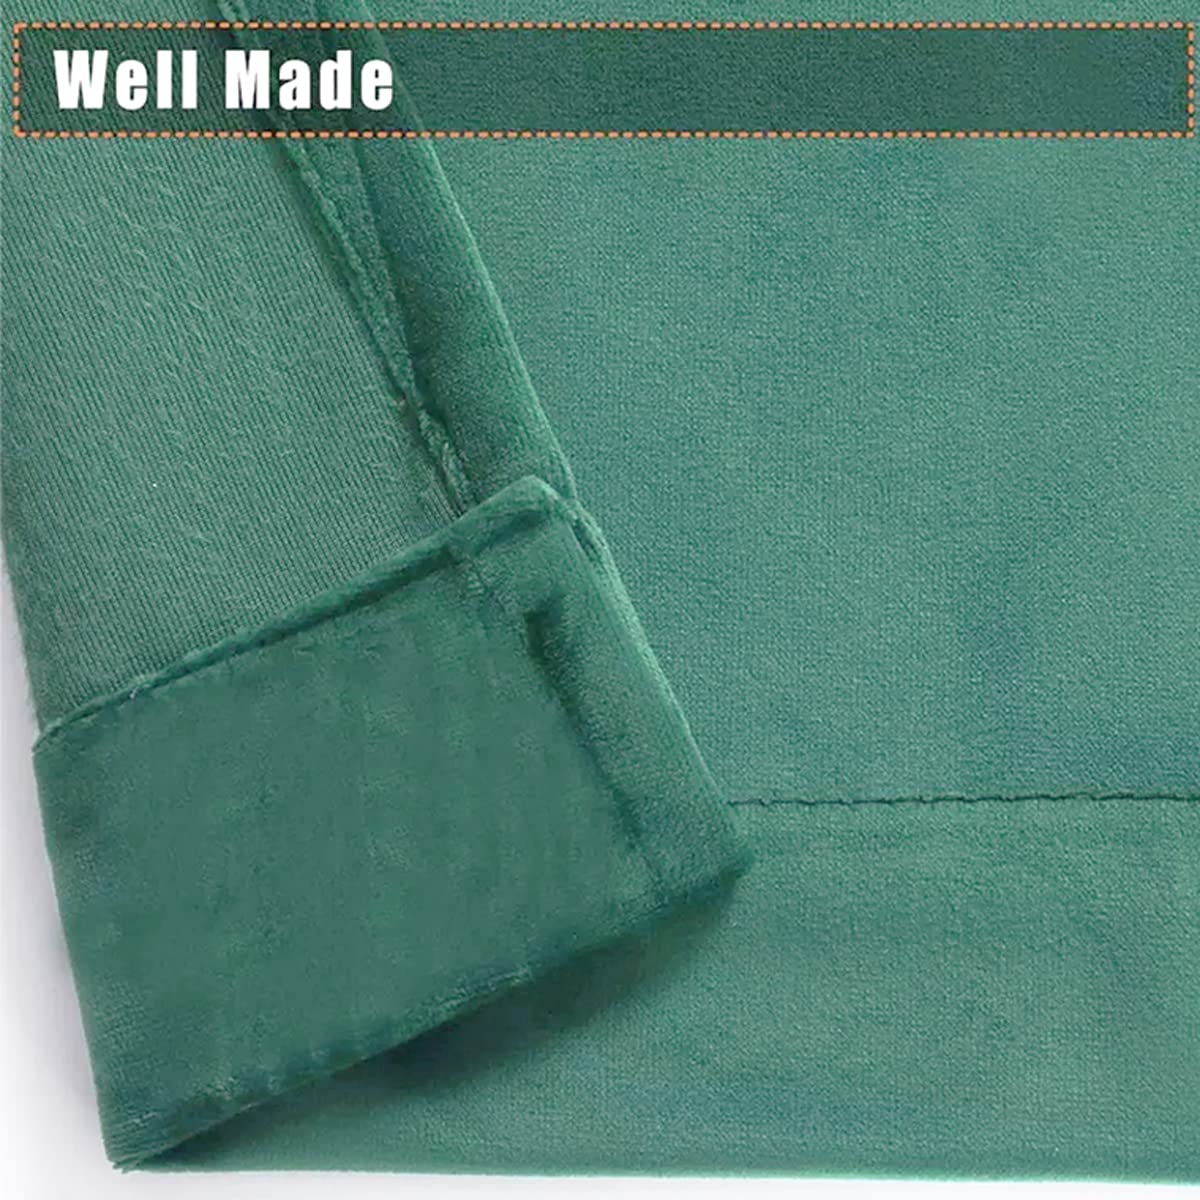 Trendy green sweatshirt with "well made" design.